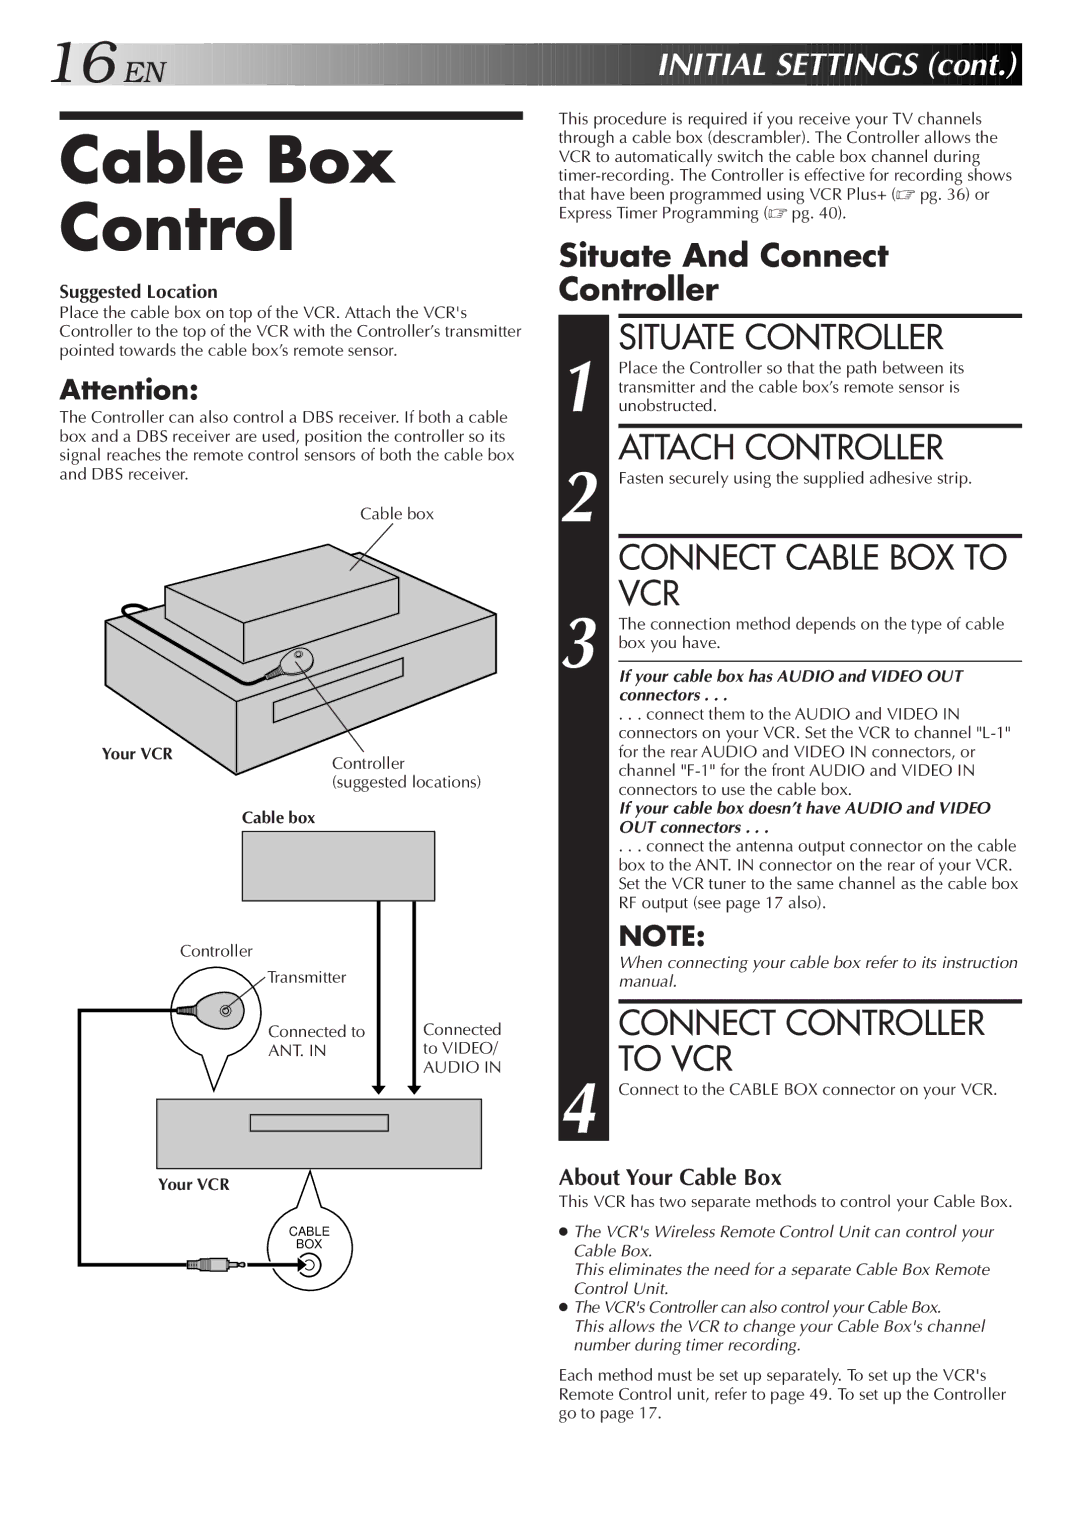 JVC HR-VP656U manual Cable Box Control, Situate Controller, Attach Controller, Connect Cable BOX to VCR 